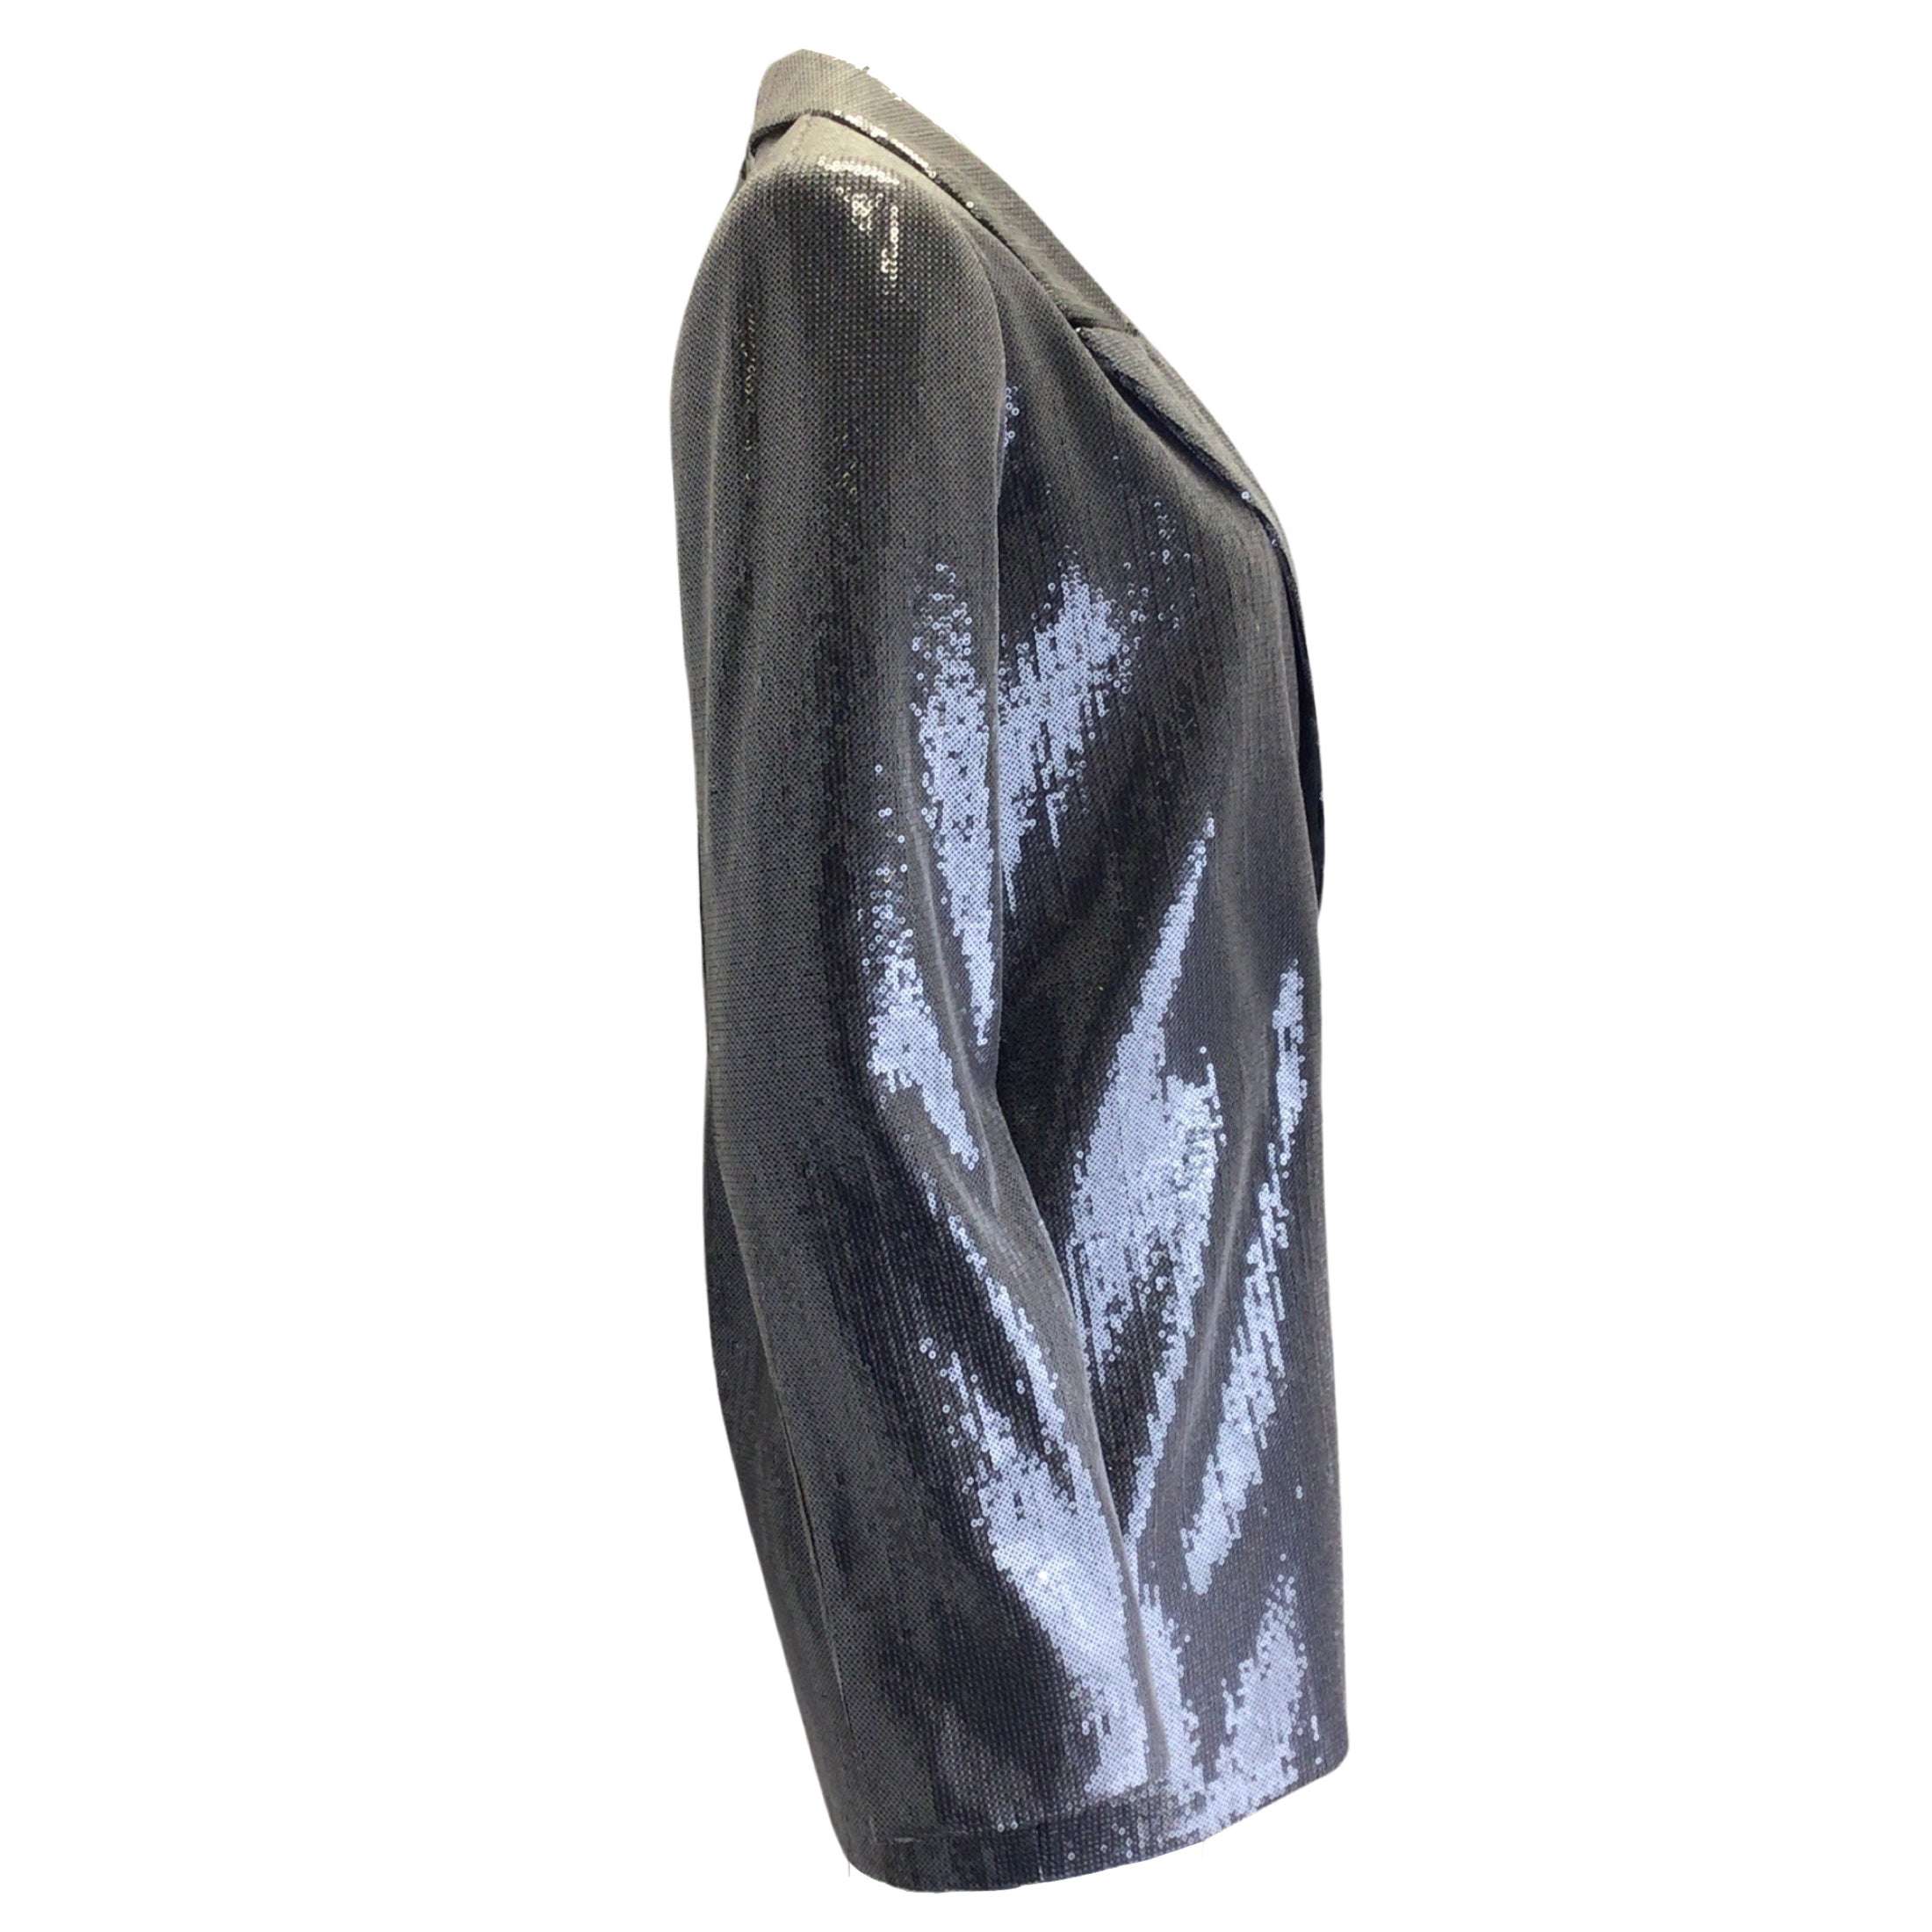 RTA Black Glass Sequined Moto Zip Blazer Jacket